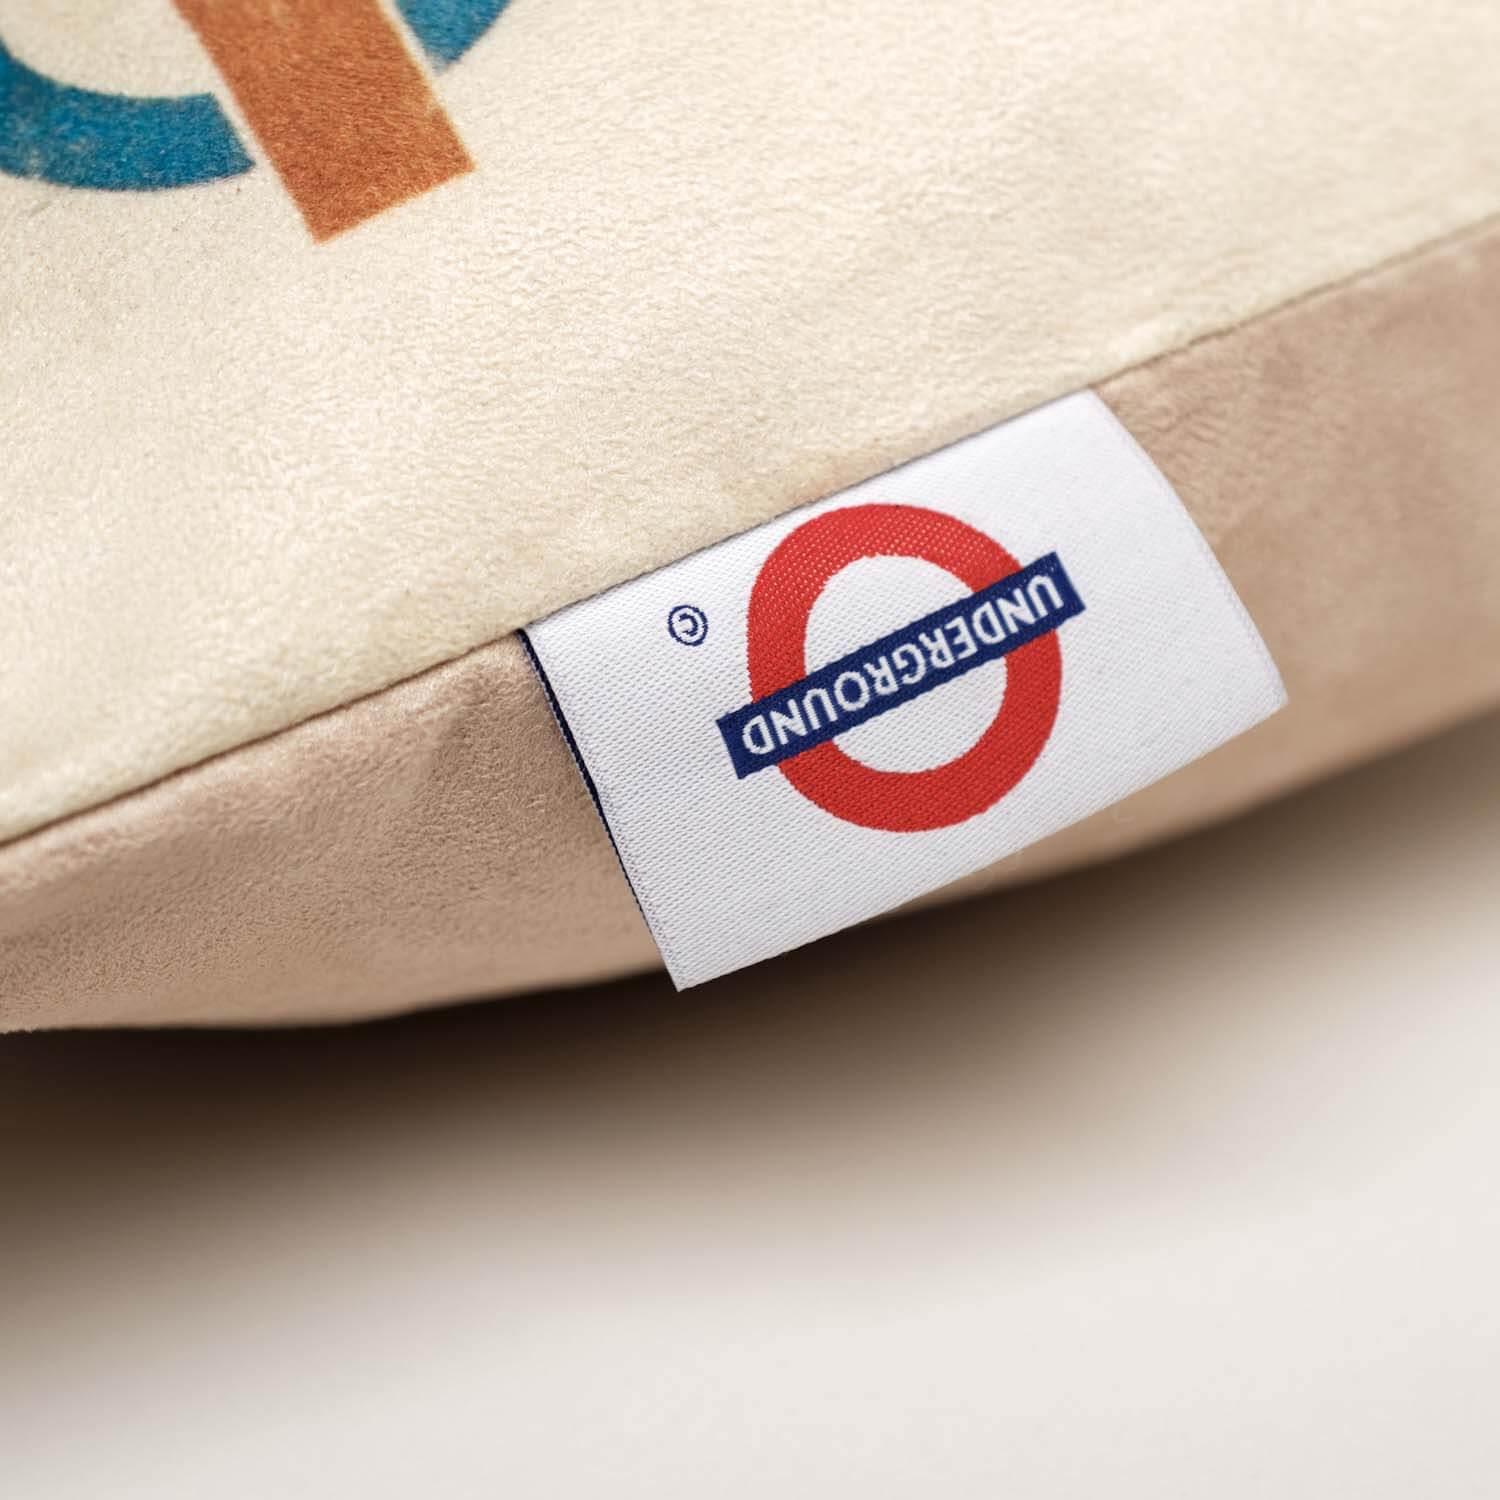 Crocus Time 2 - London Transport Cushion - Handmade Cushions UK - WeLoveCushions